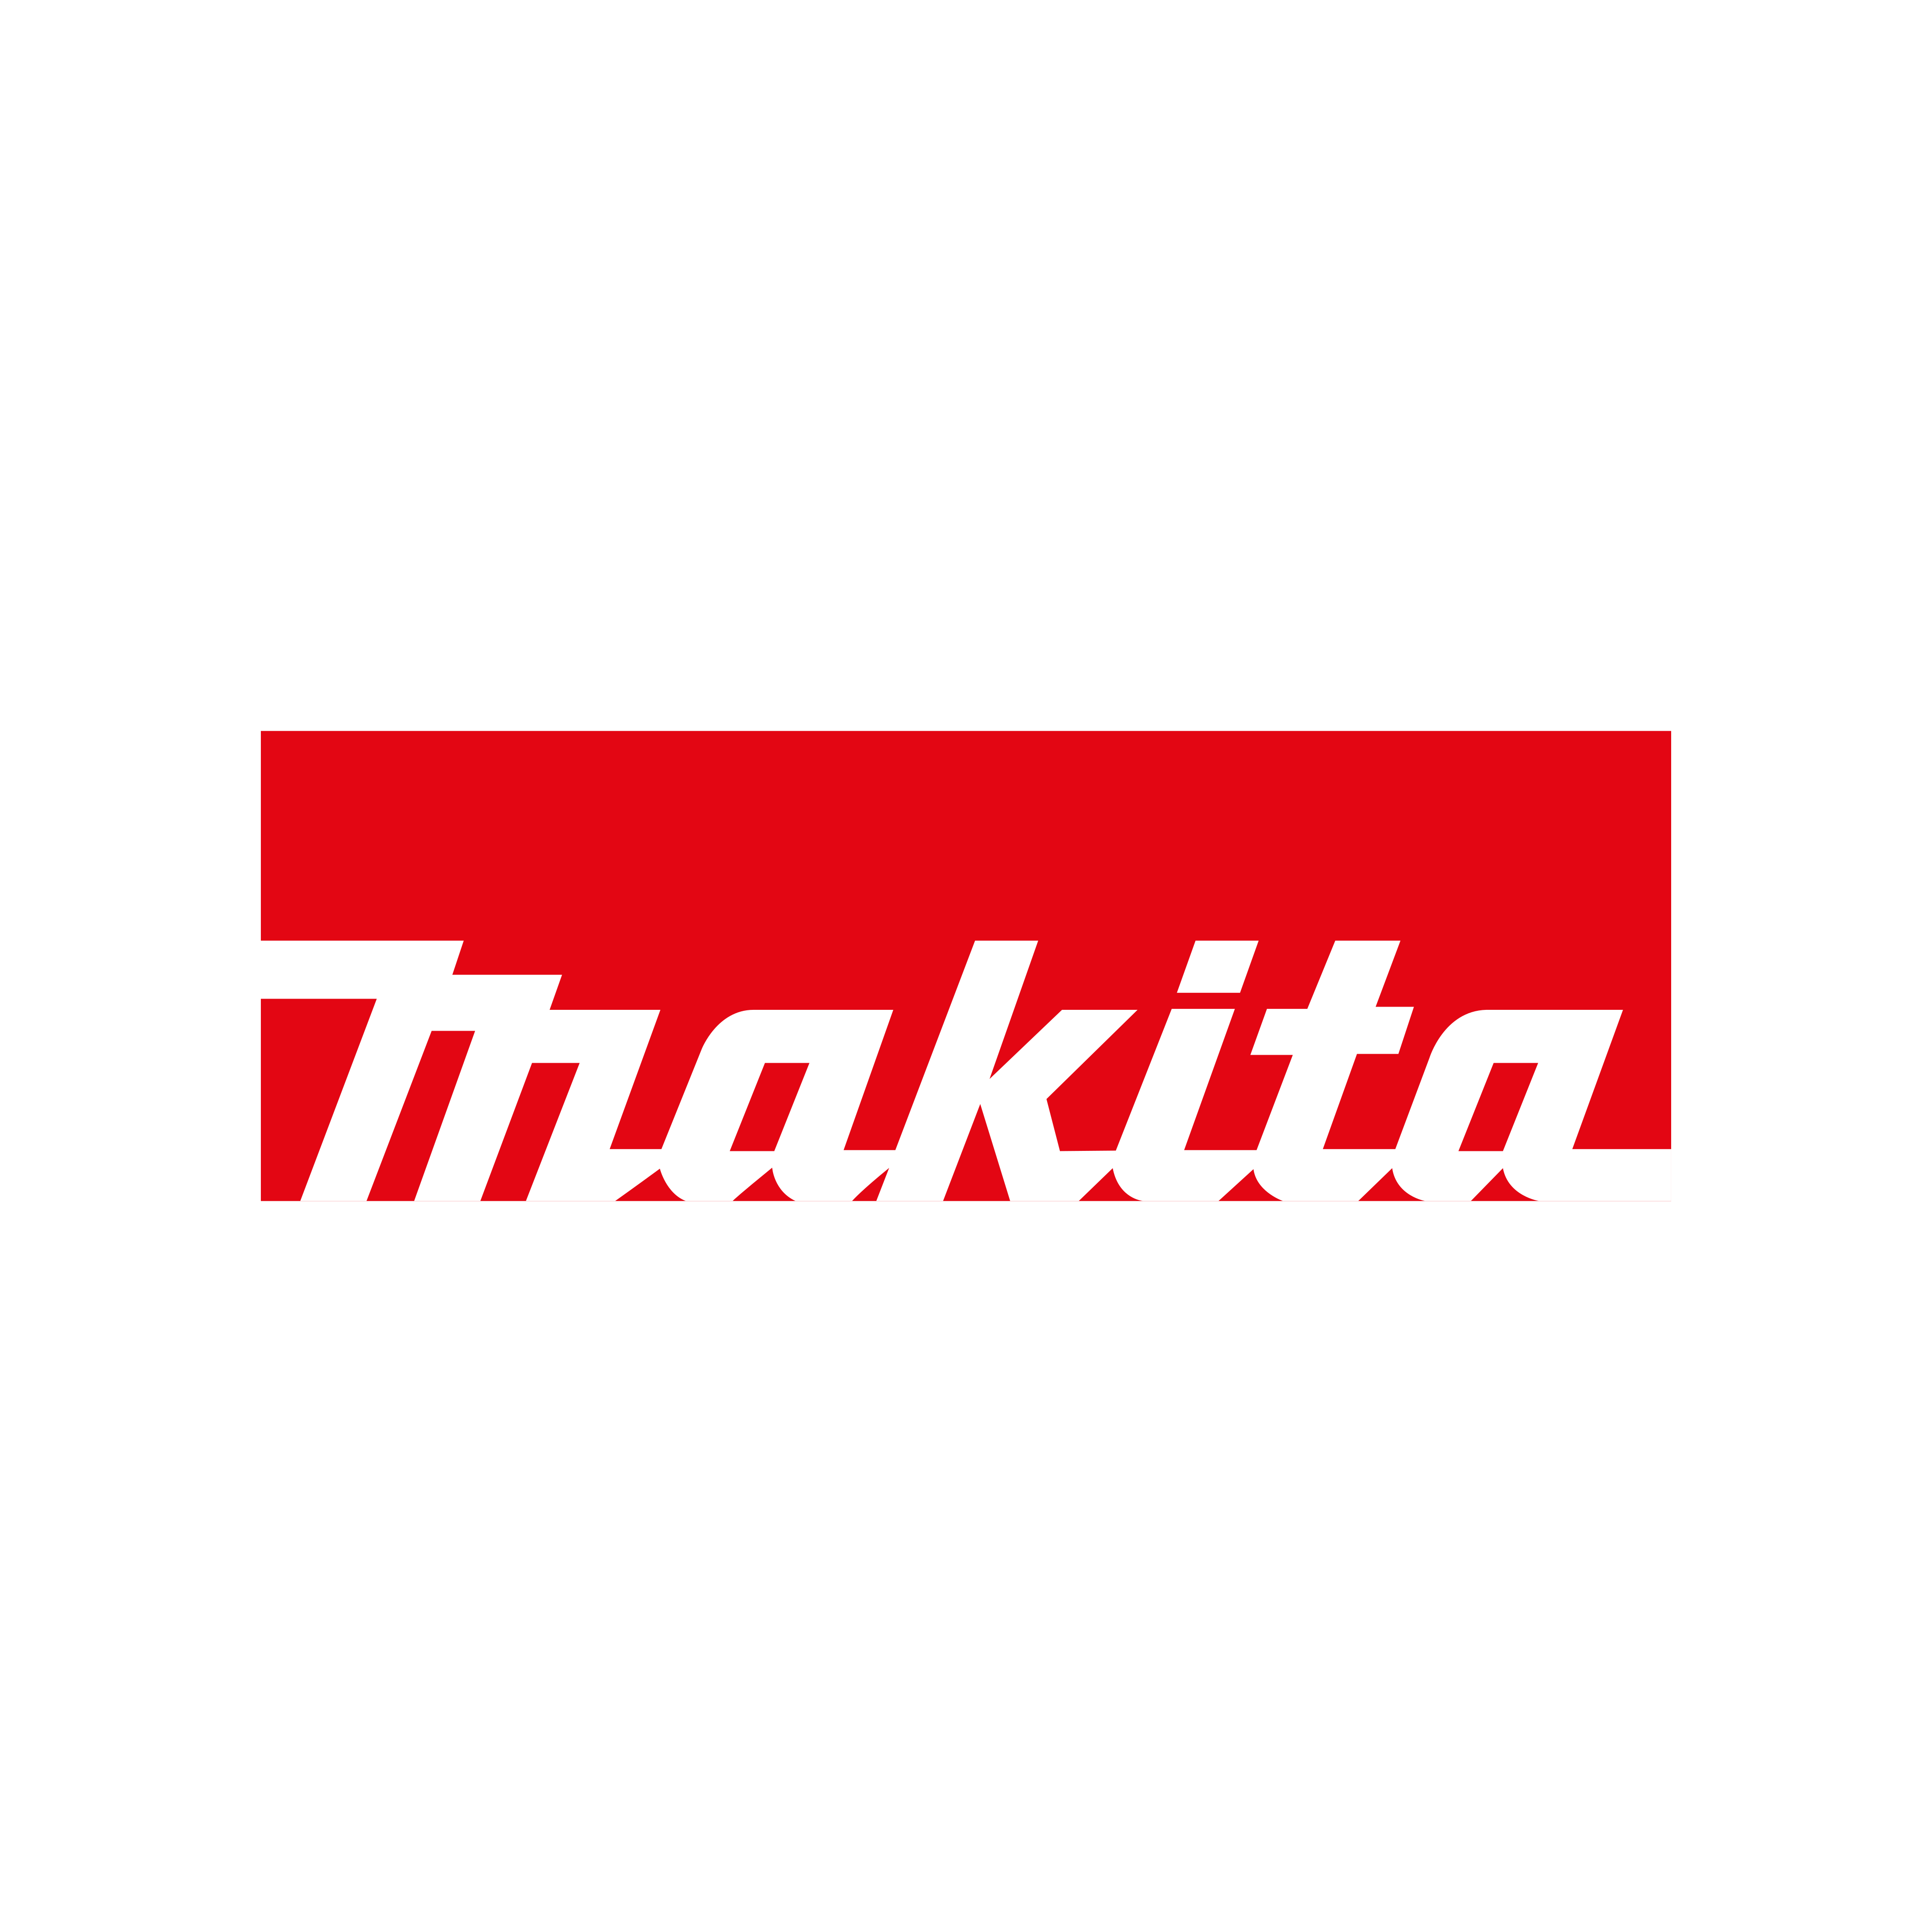 makita logo 0 - Makita Logo